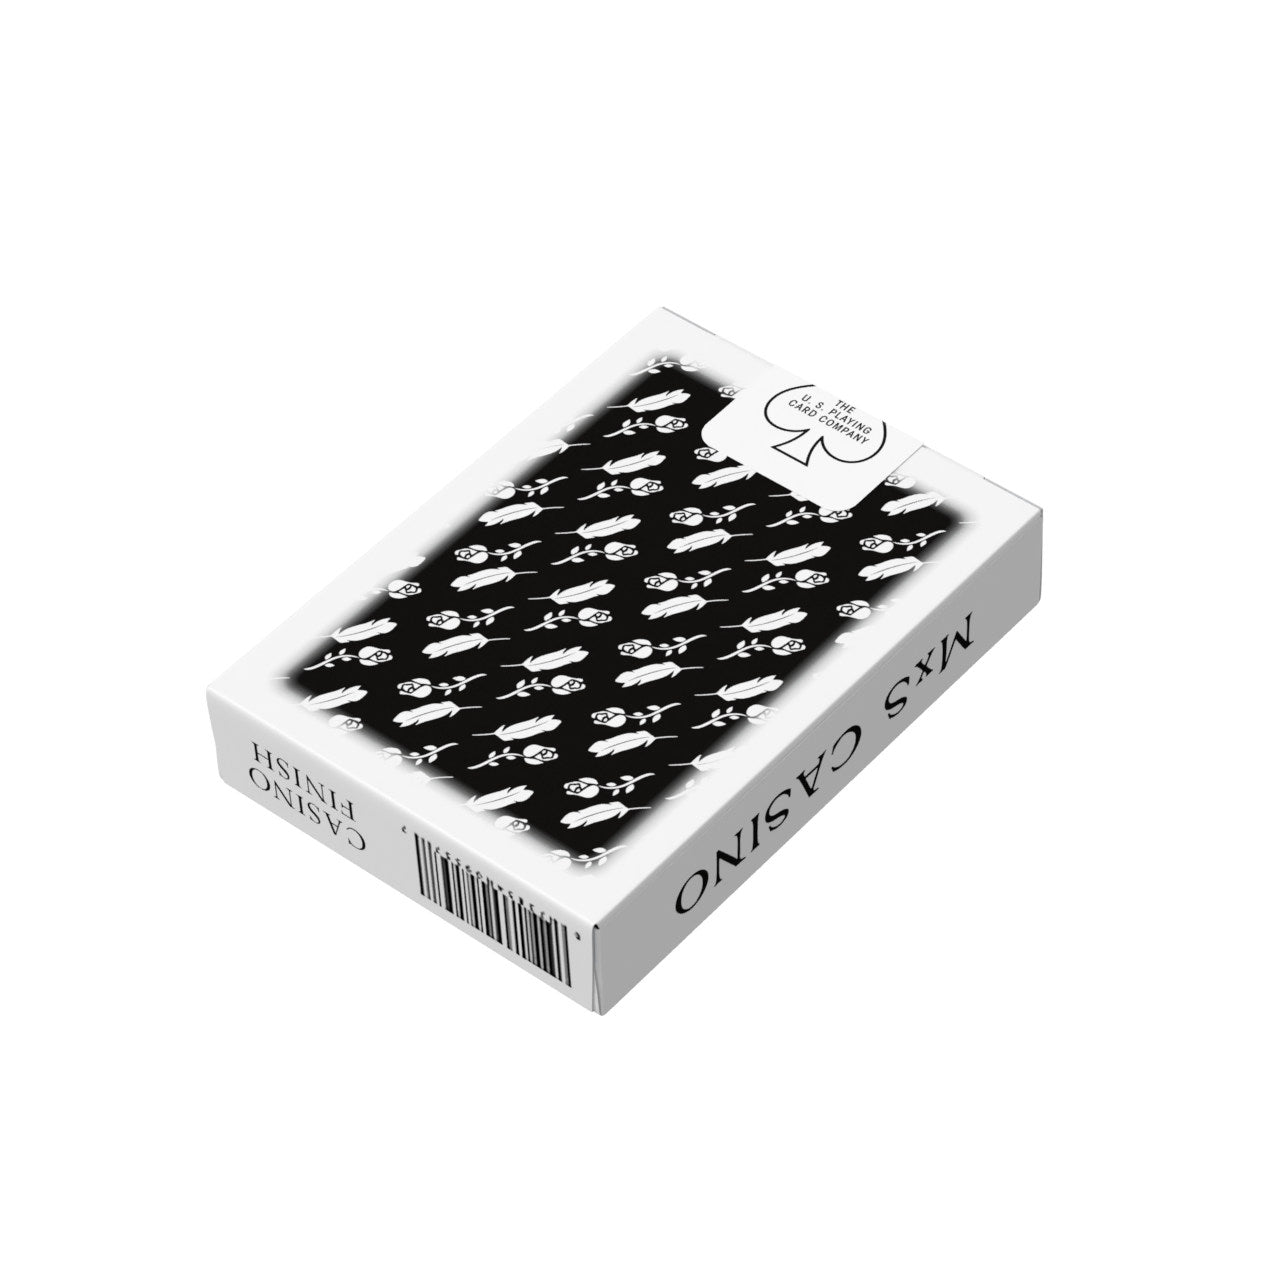 Versace ZPLCA0001 ZCART001 BAROCCO Playing cards set Black